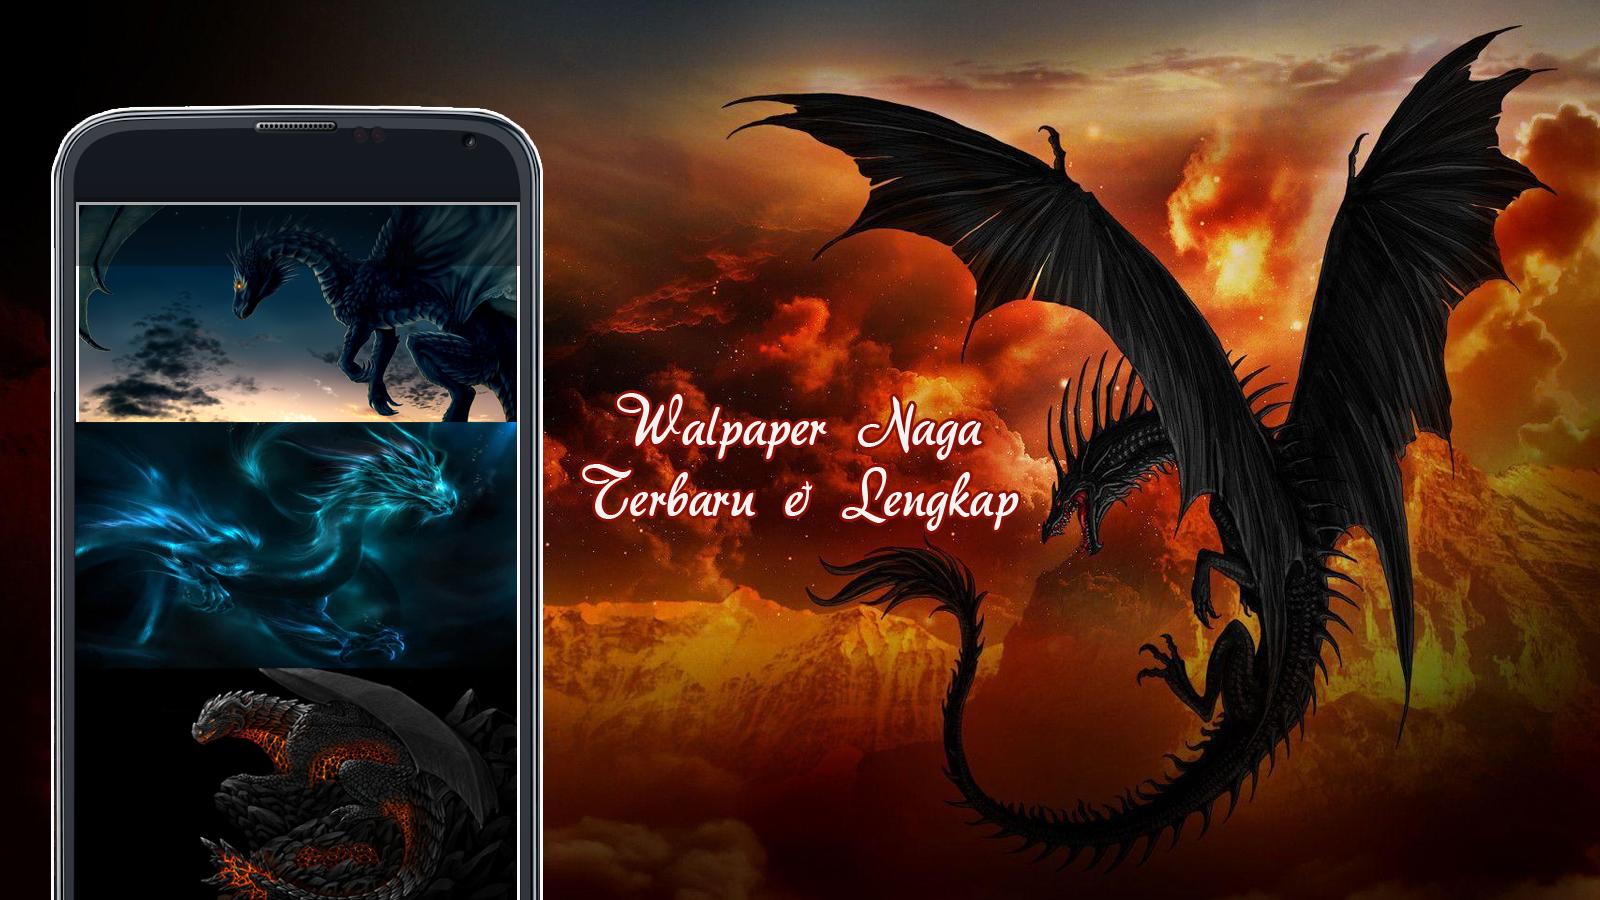 Wallpaper Ular Naga For Android APK Download